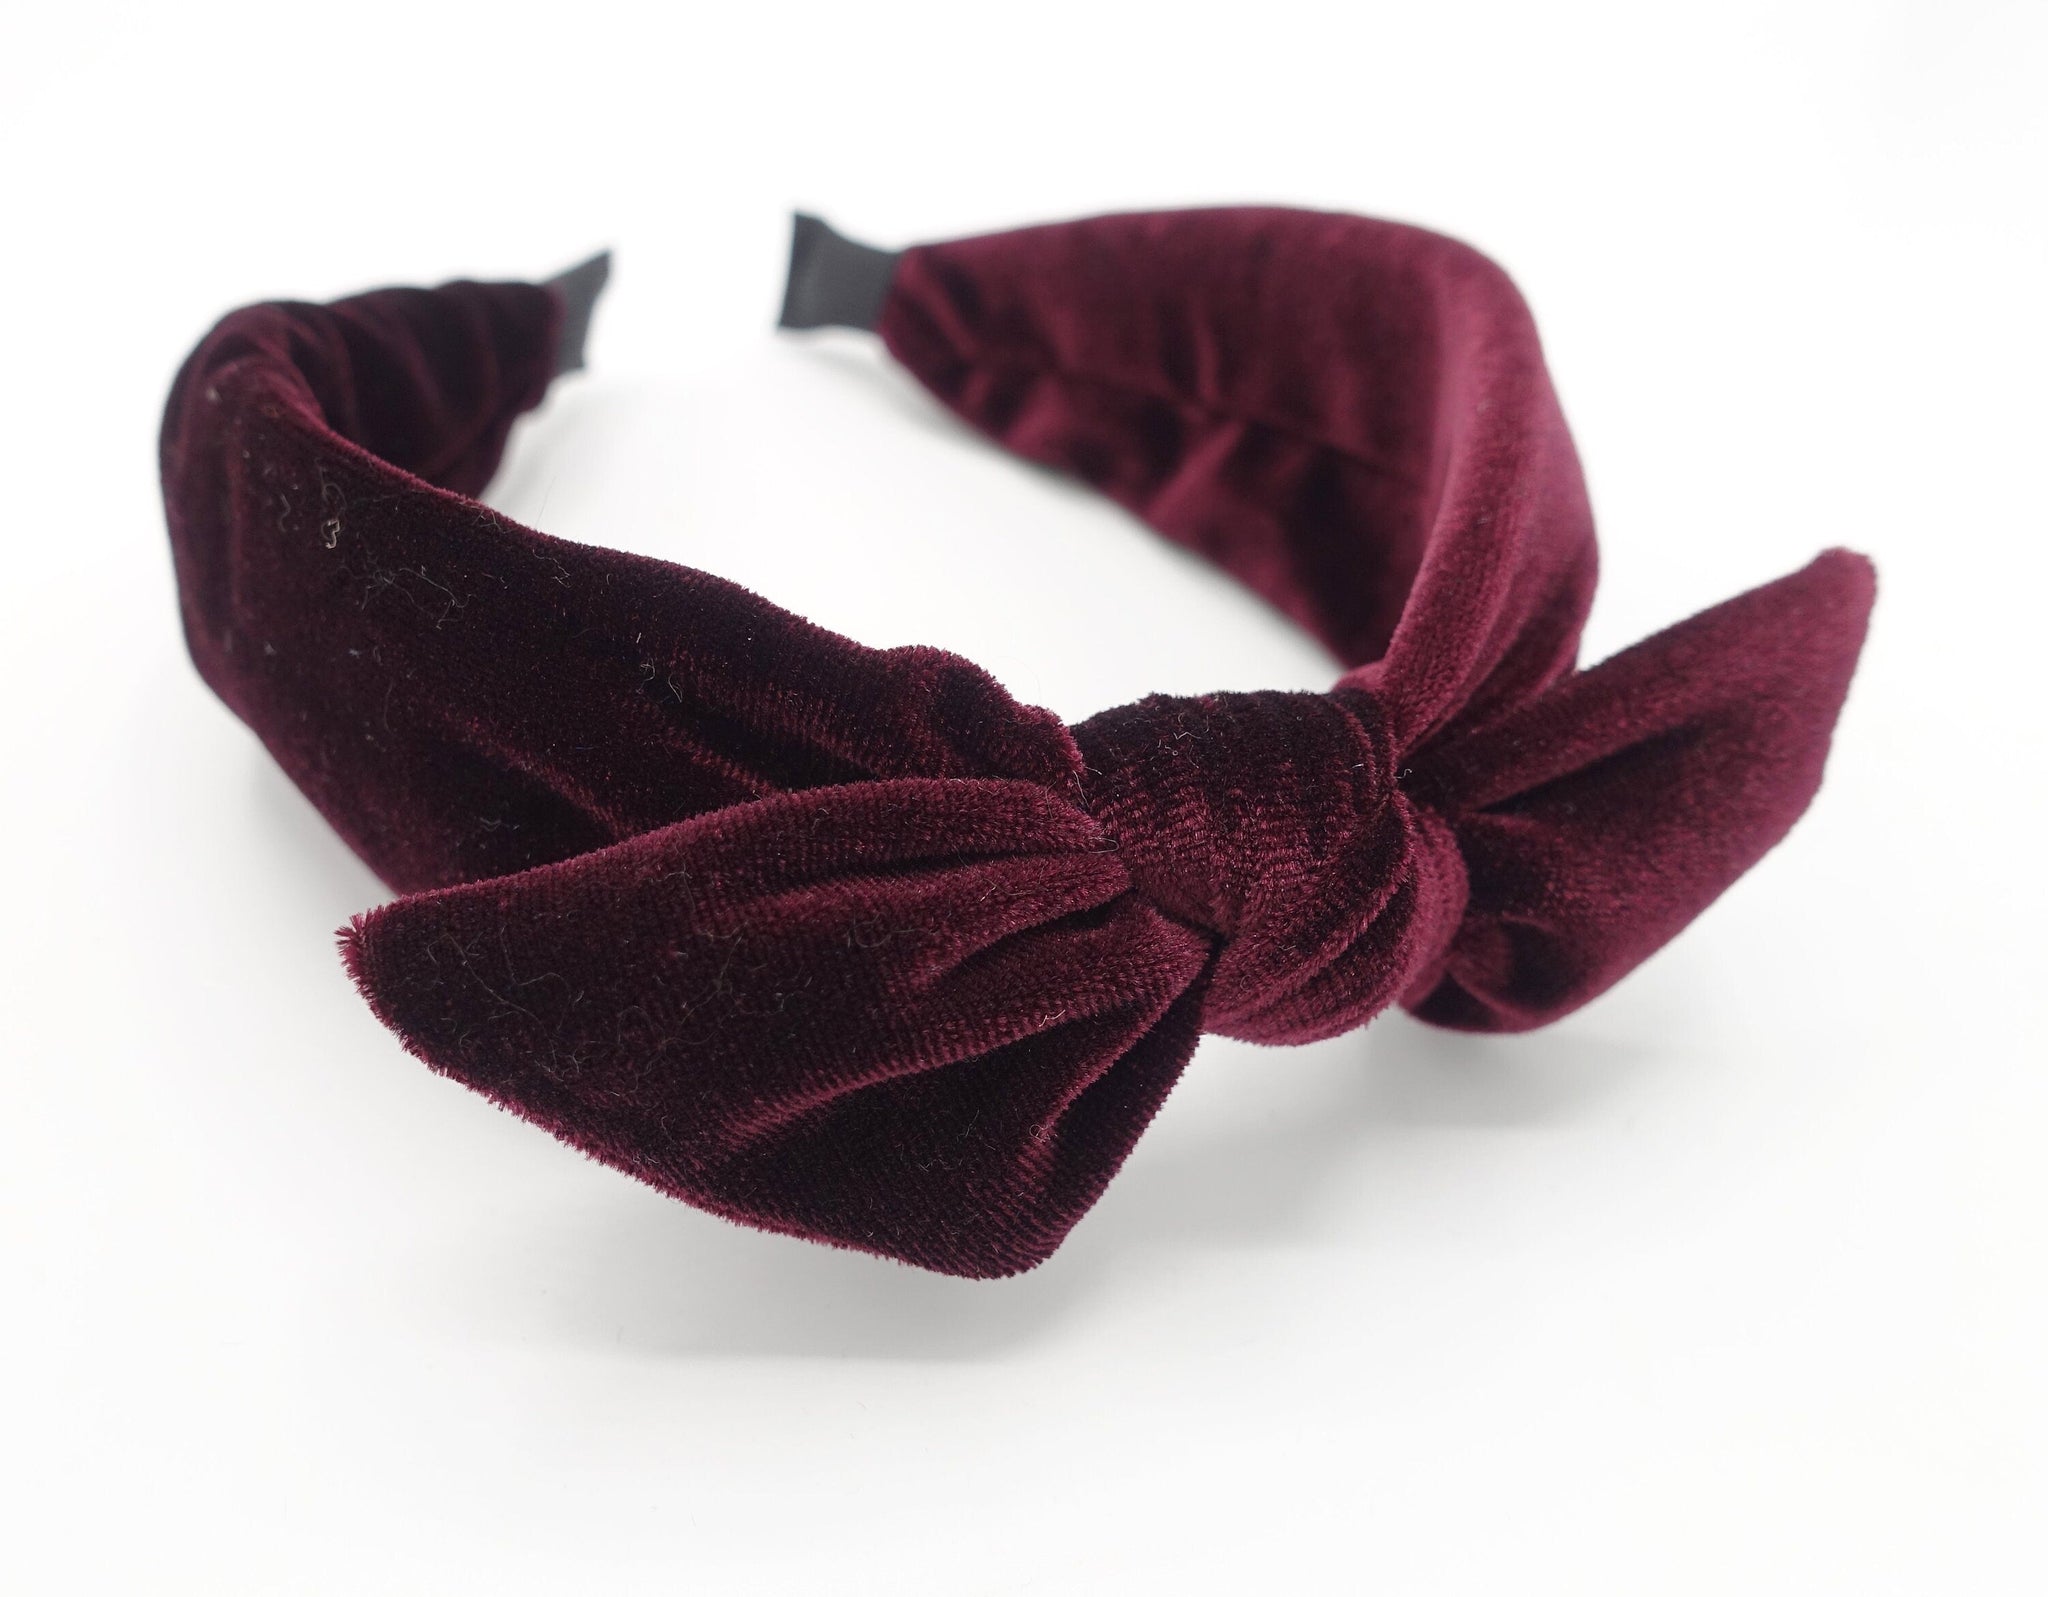 veryshine.com Headband Red wine velvet bow knot headband wired headband woman hair accessory